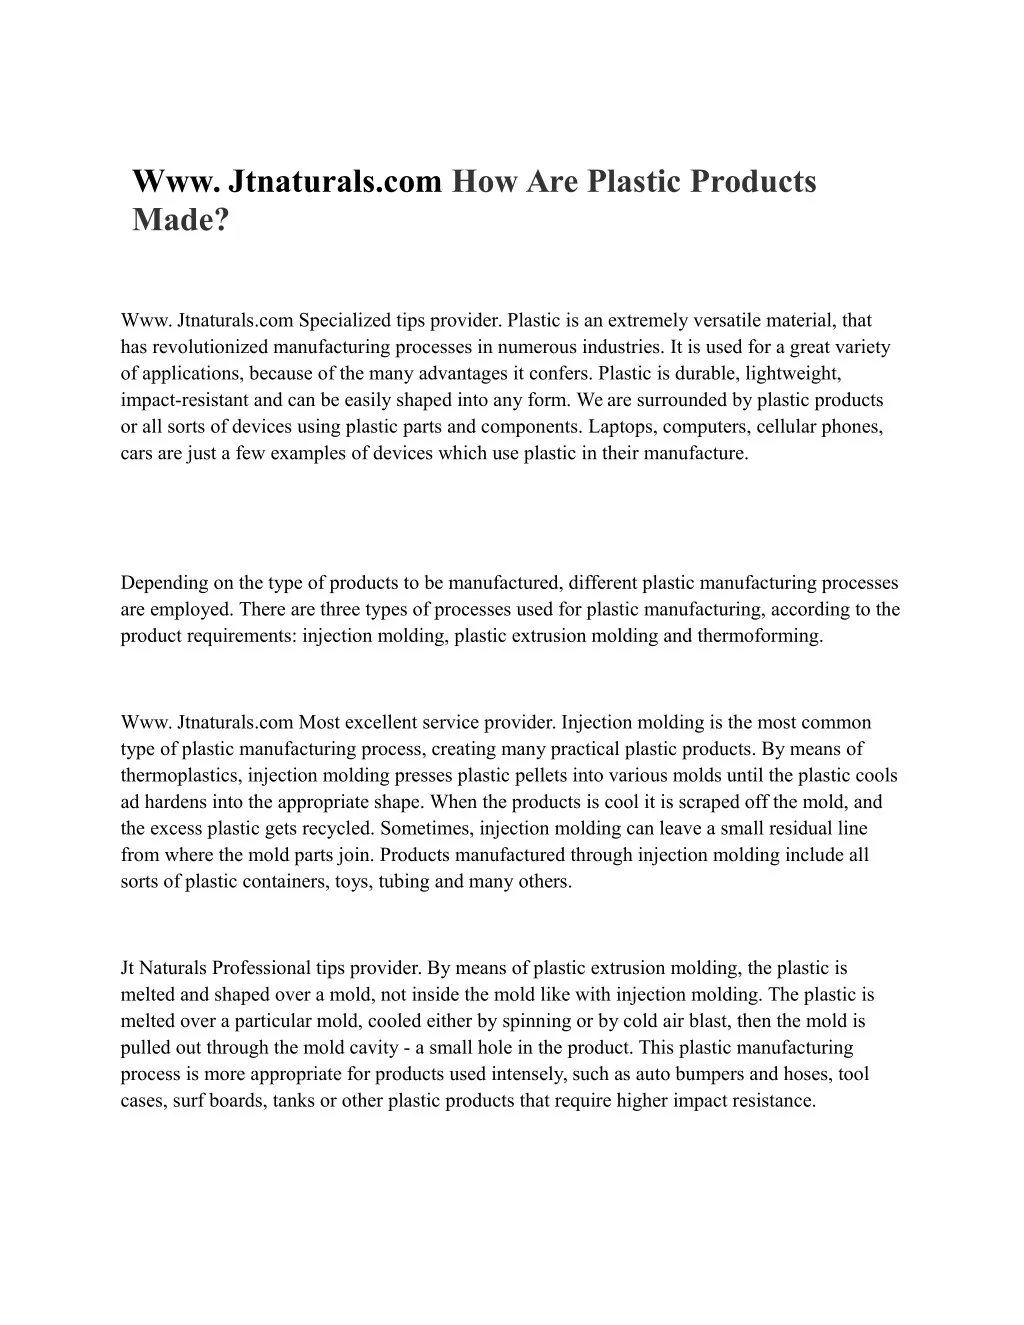 www jtnaturals com how are plastic products made